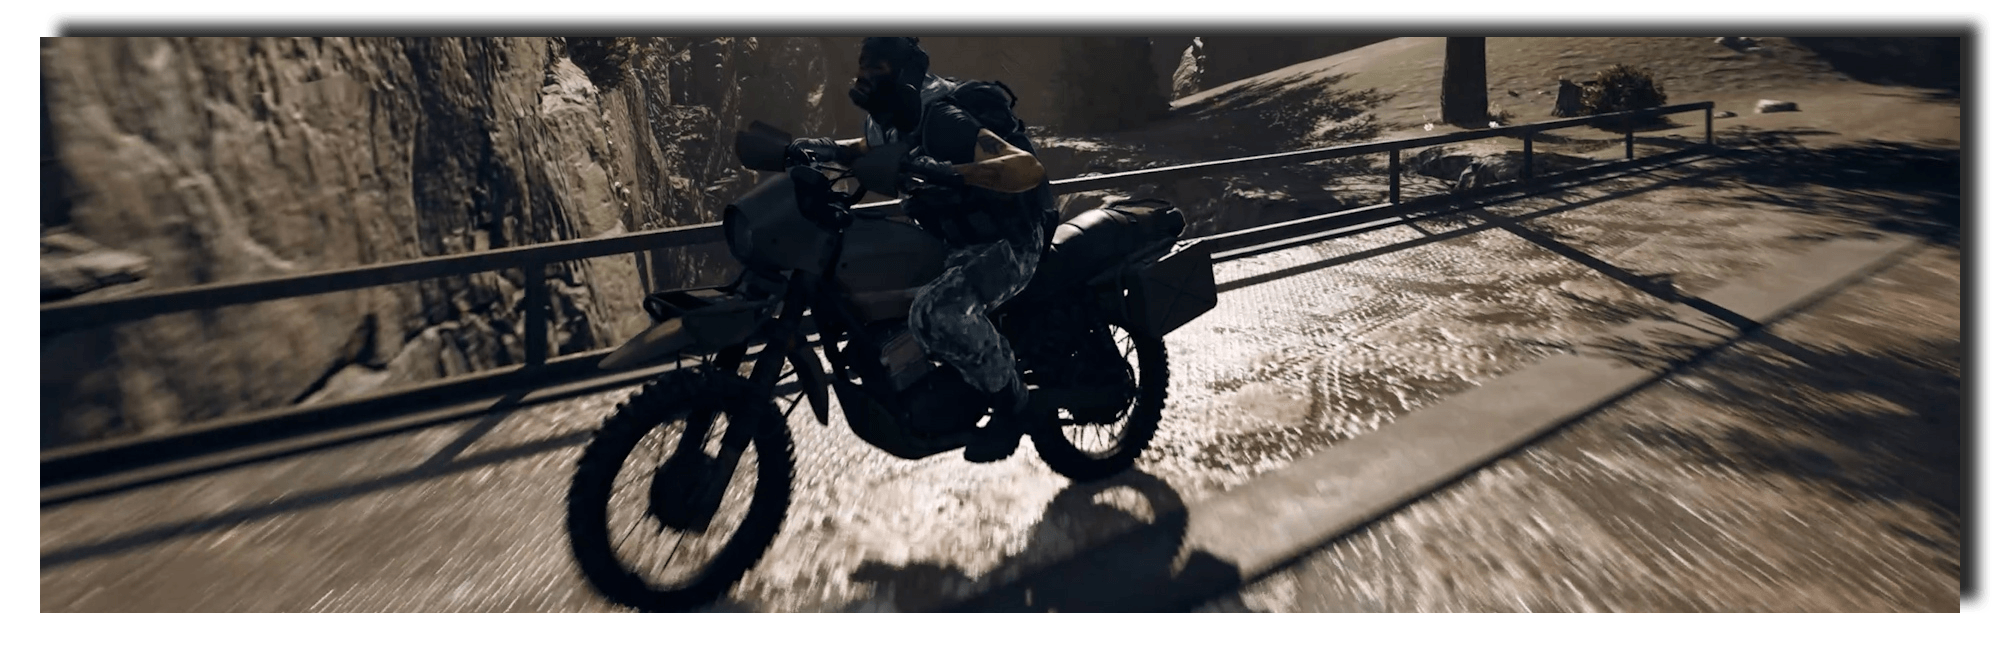 Screenshot of the new Dirt Bike in Warzone.